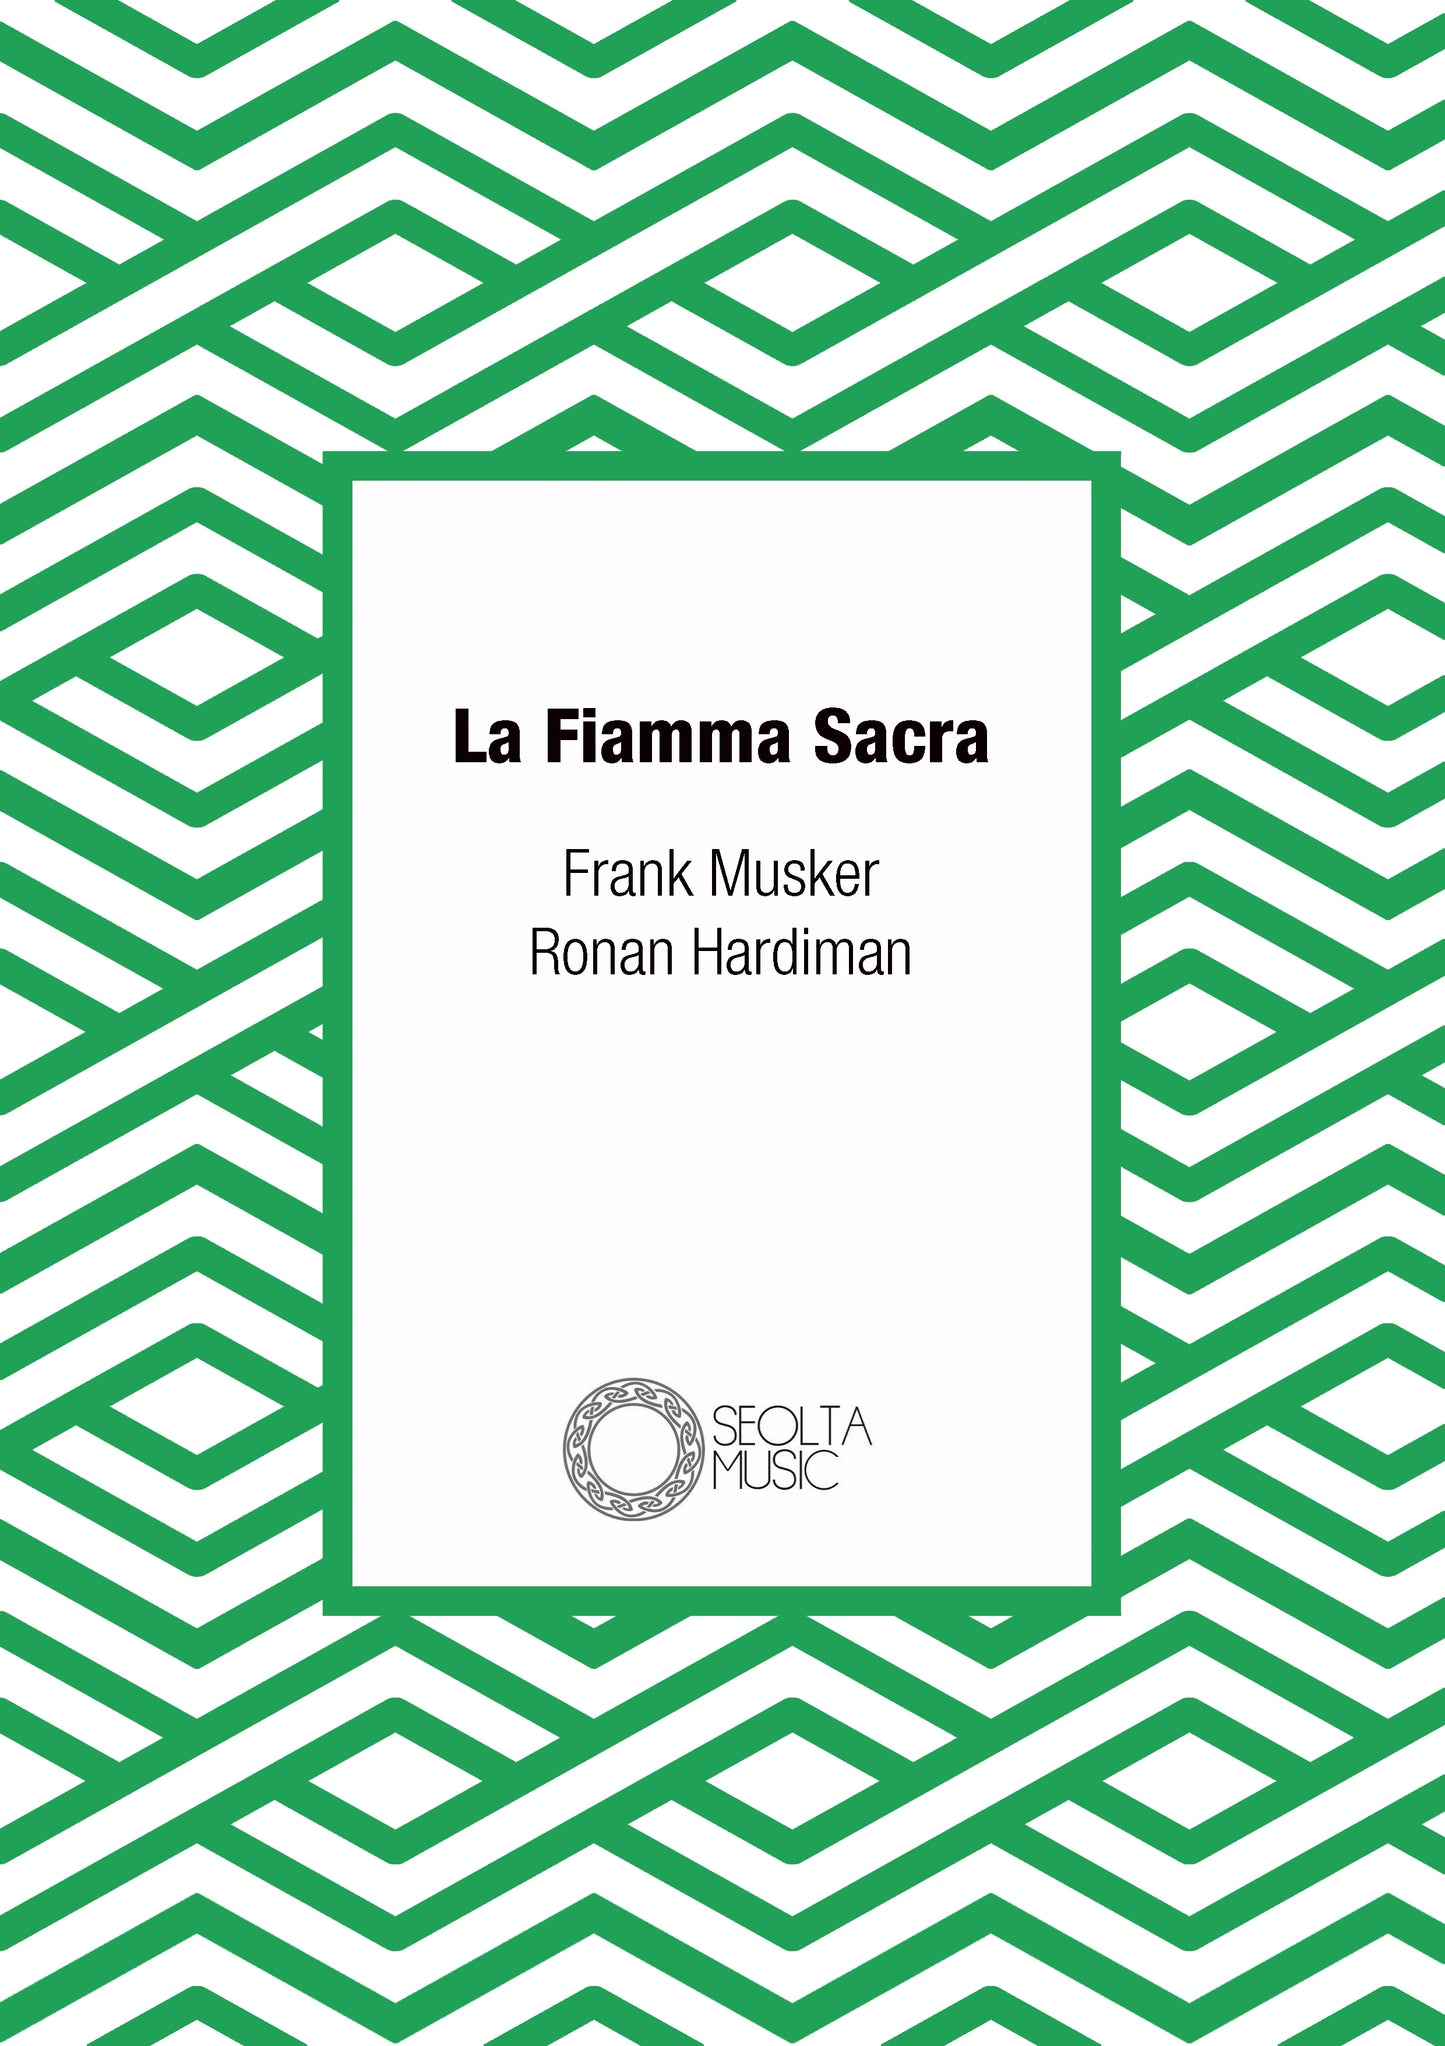 la-fiamma-sacra-hardiman-musker-sheet-music